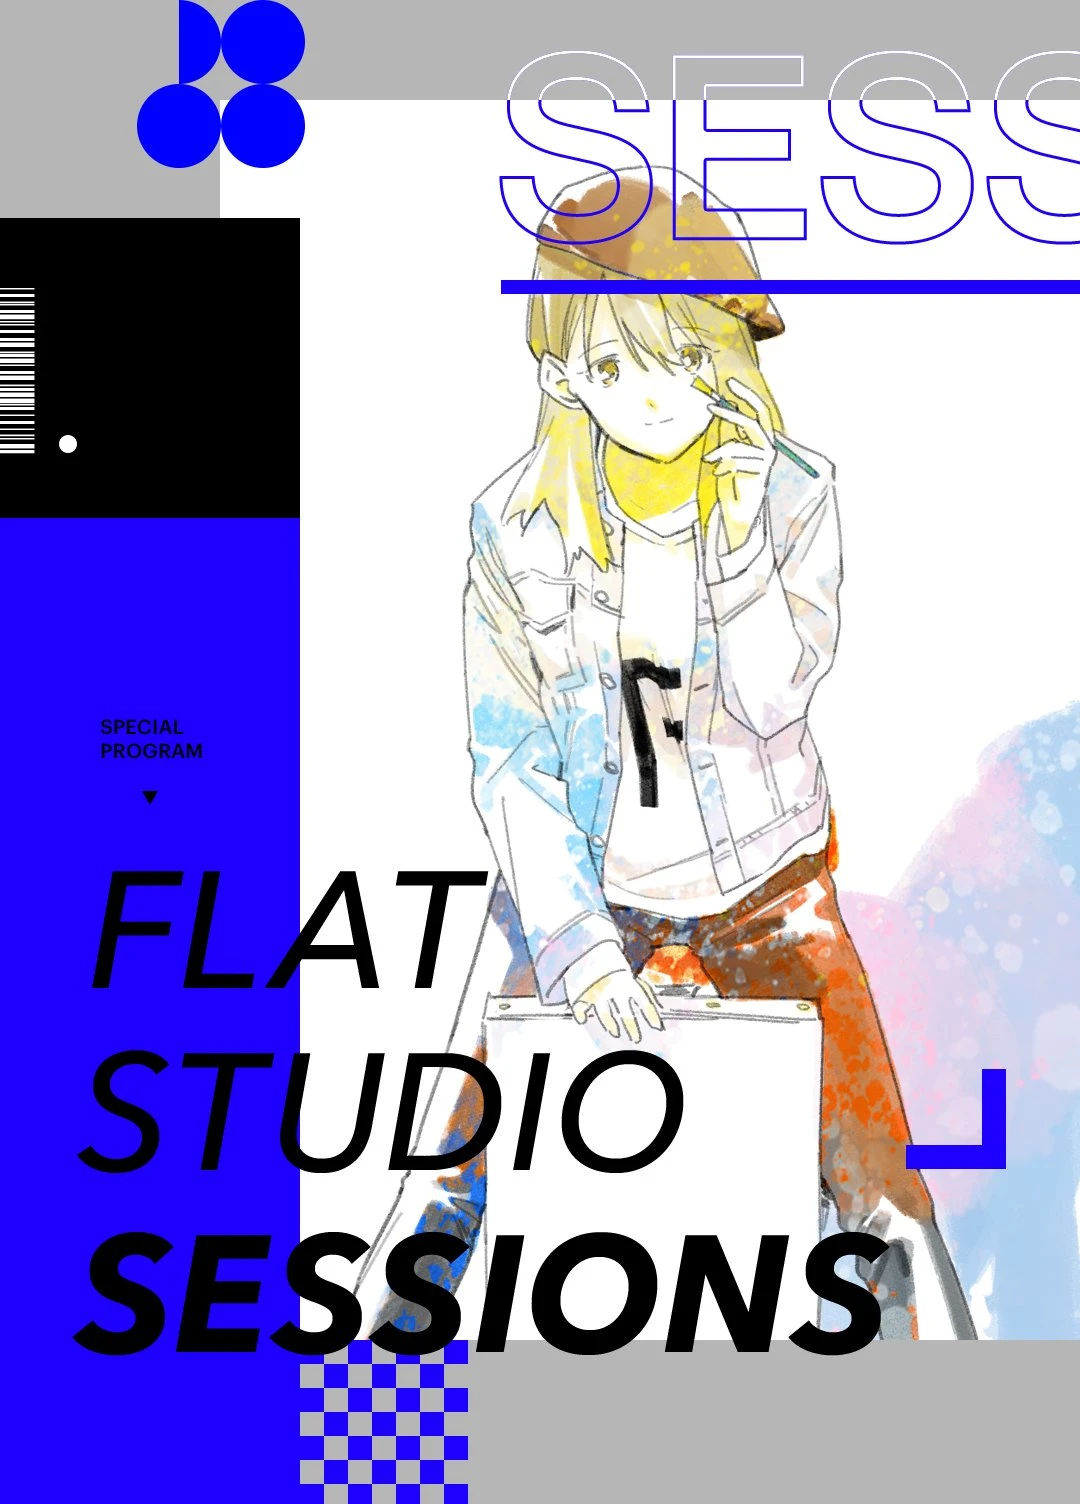 KAI-YOU Premium編集長 新見直がワークショップ「FLAT STUDIO SESSIONS」に出演